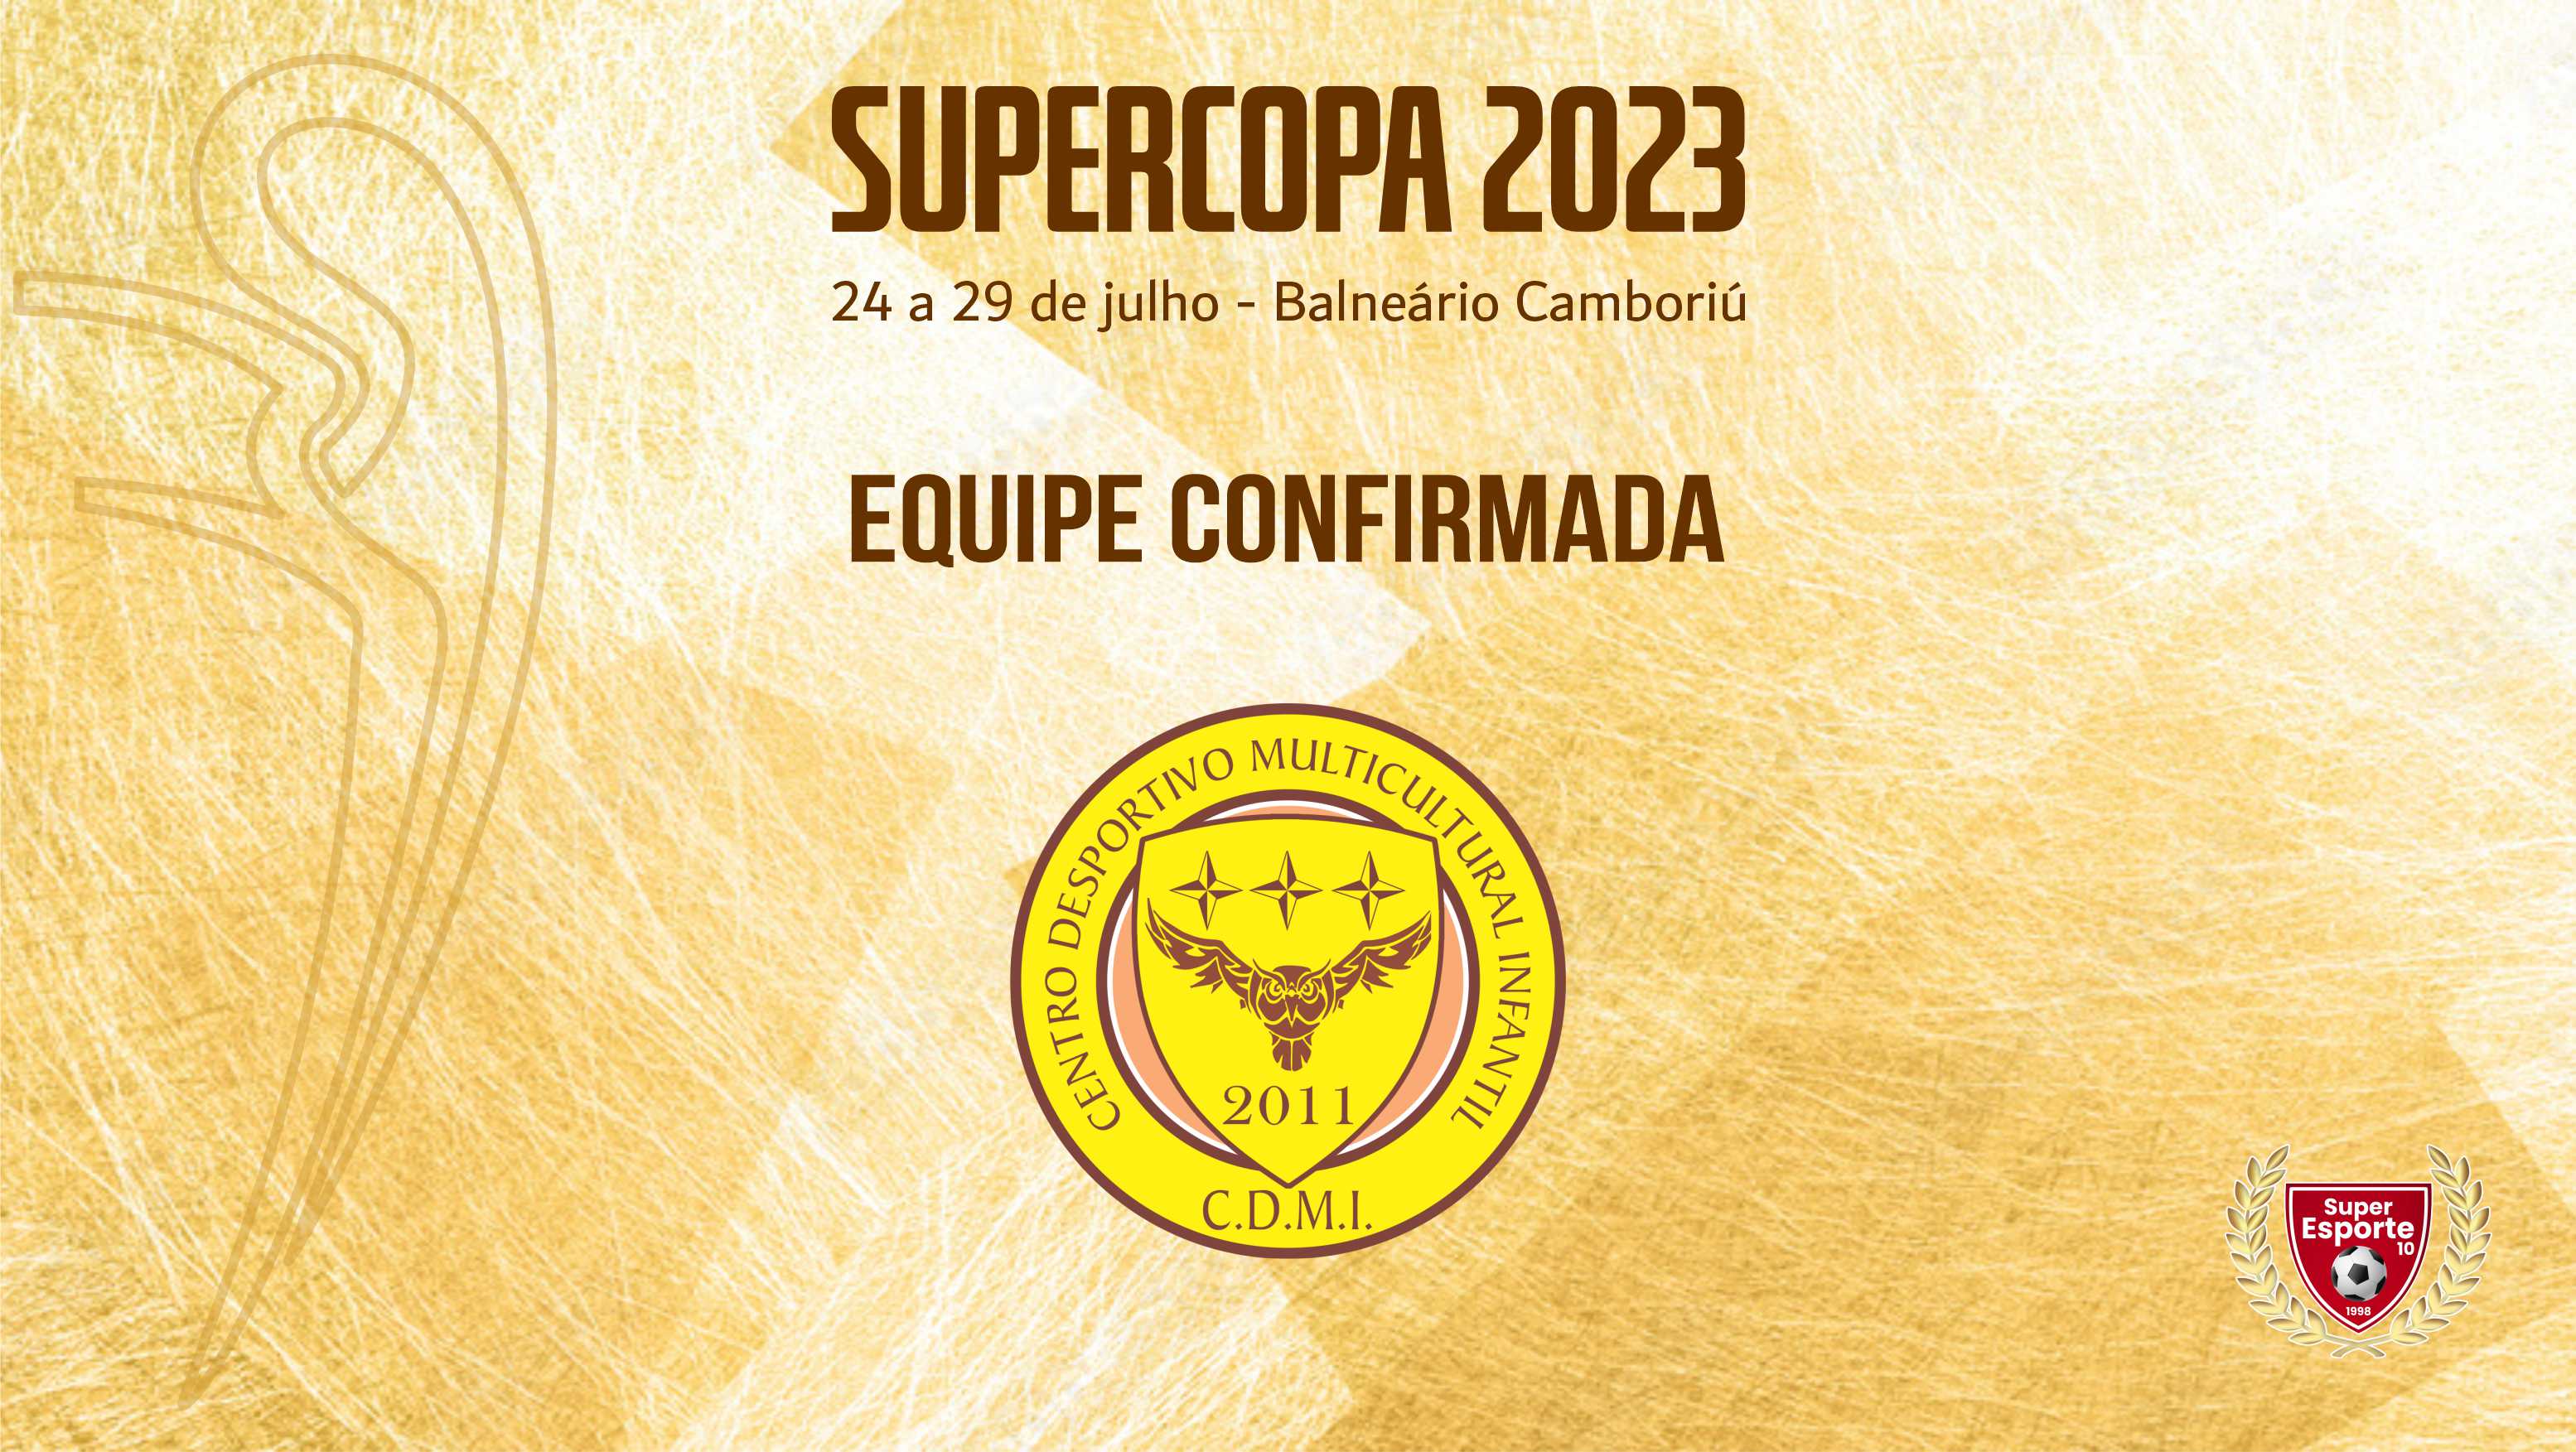 CDMI do Pará confirma presença na Supercopa